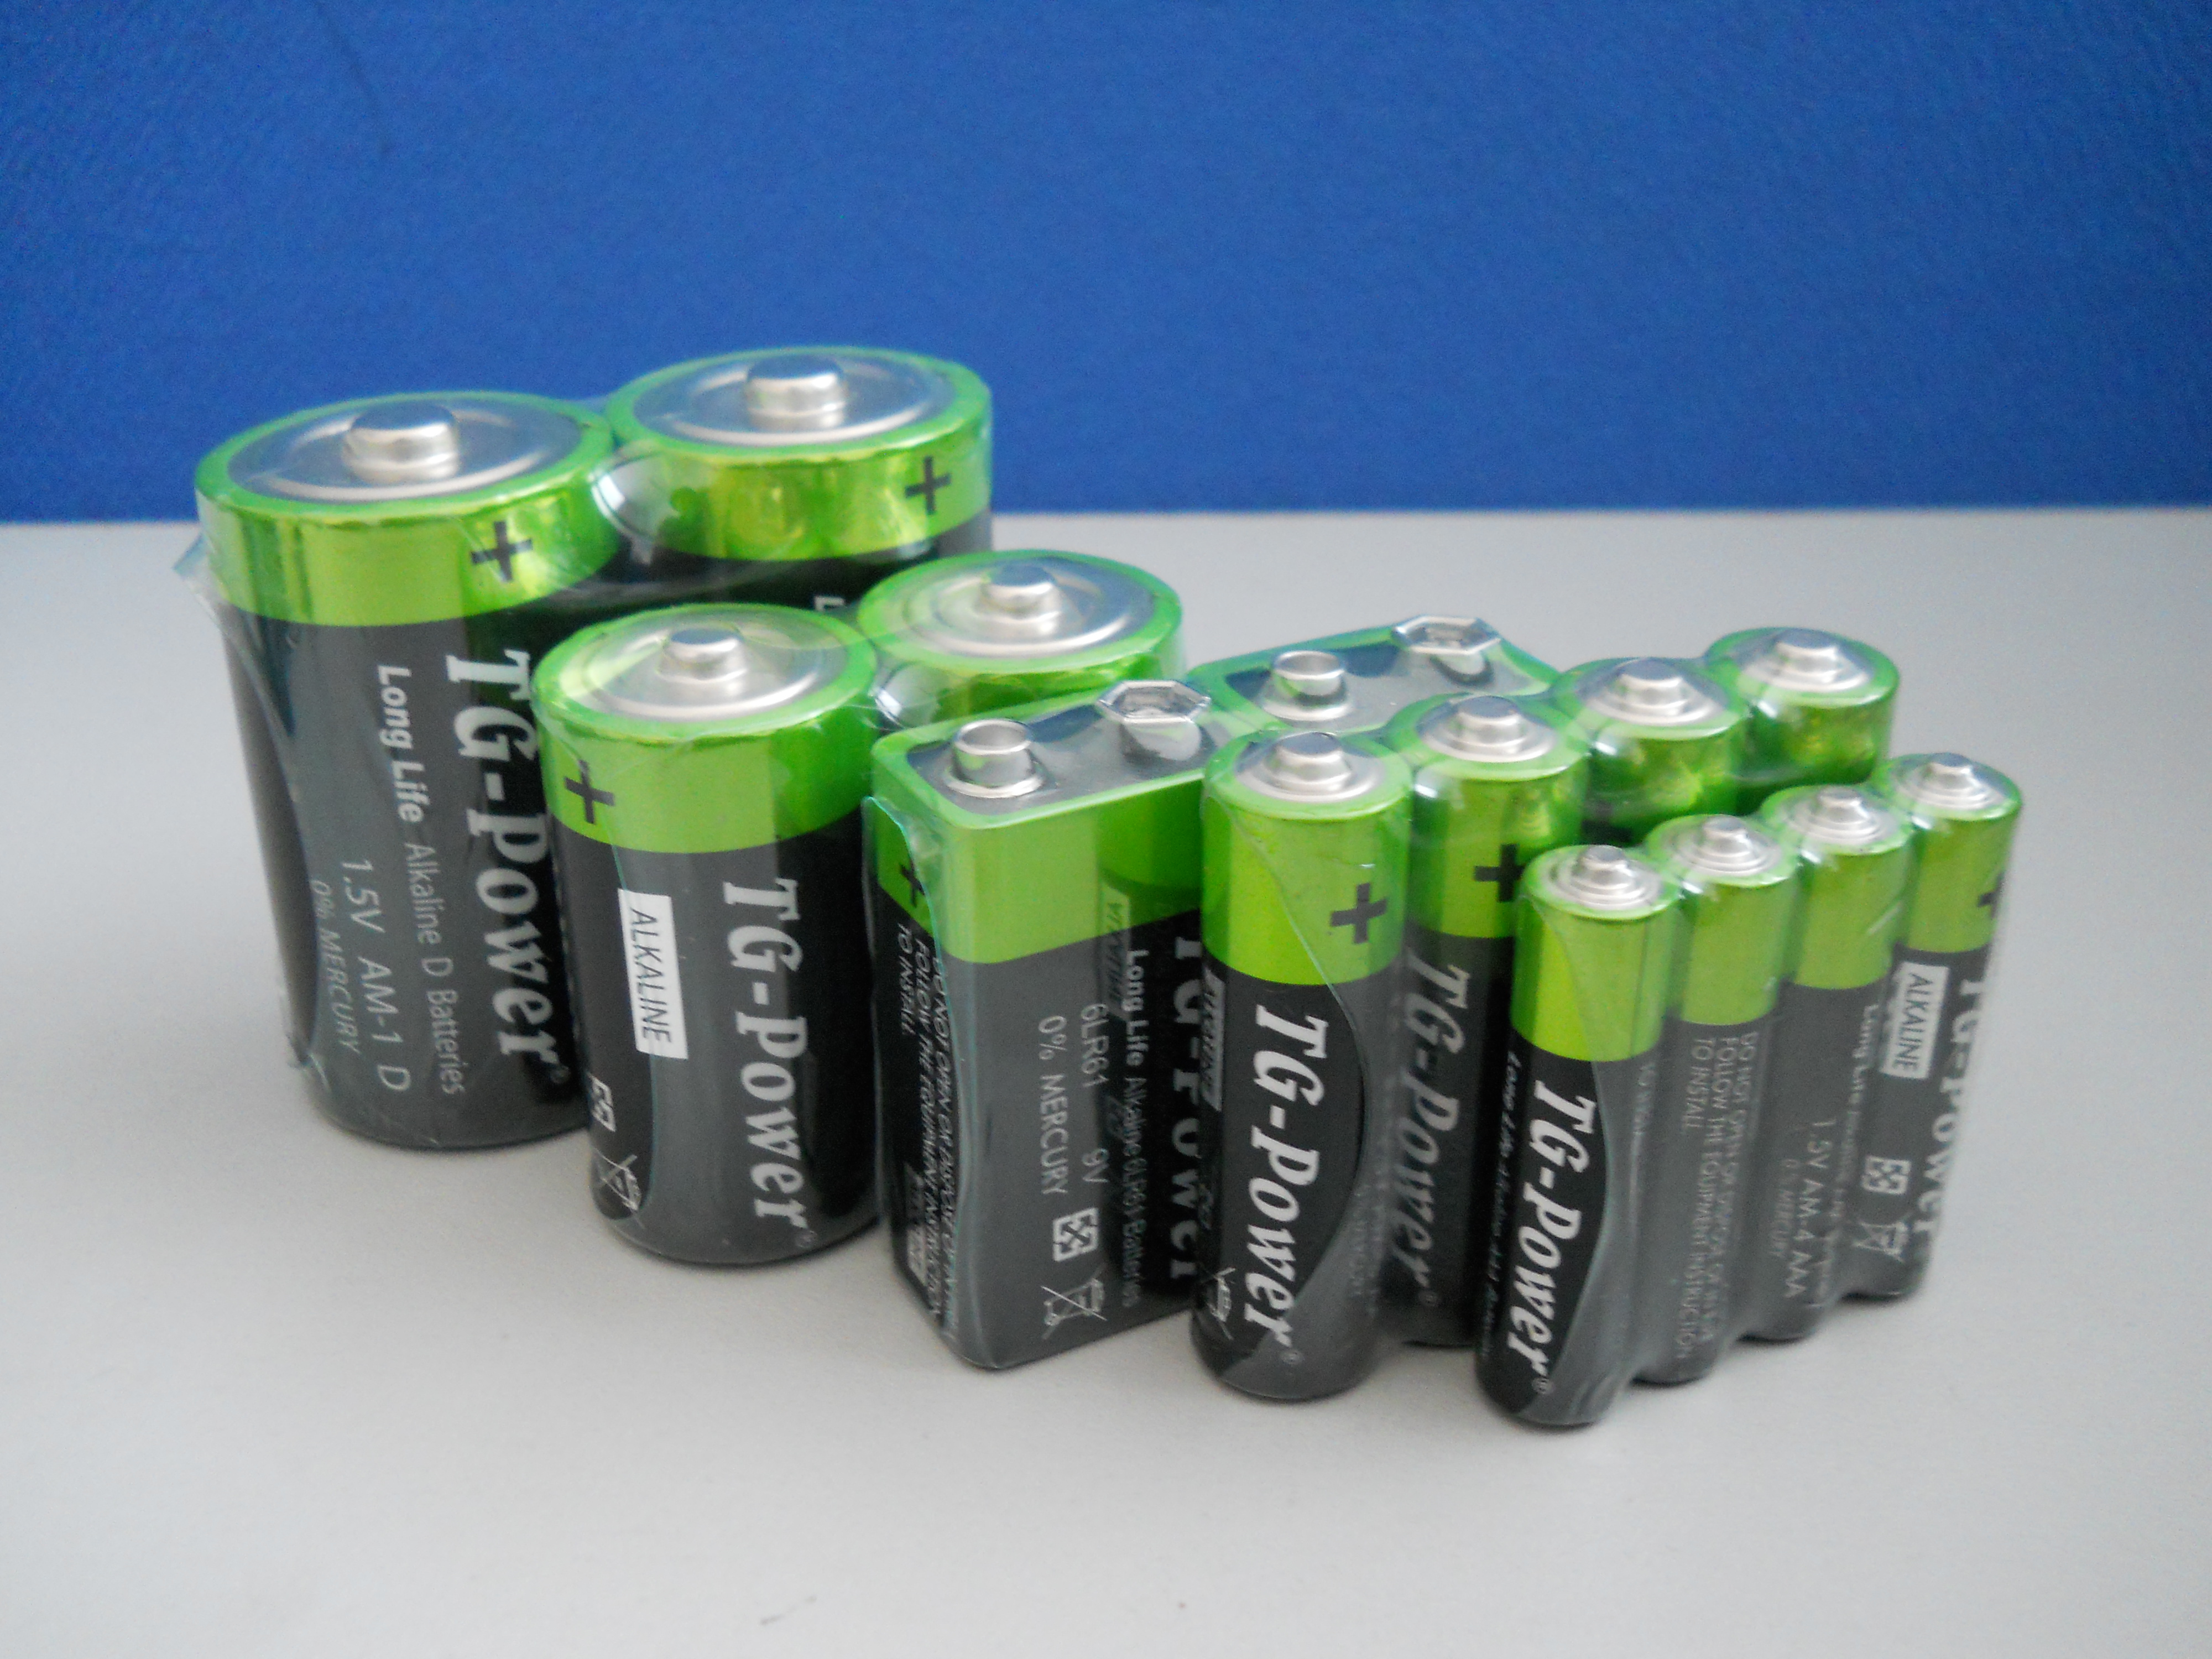 Элемент питания c. Батарейки Alkaline AAA. Батарейки типа ААА 1.5V аккумуляторные. Батарейка AAA 9v. AA AAA батарейки.